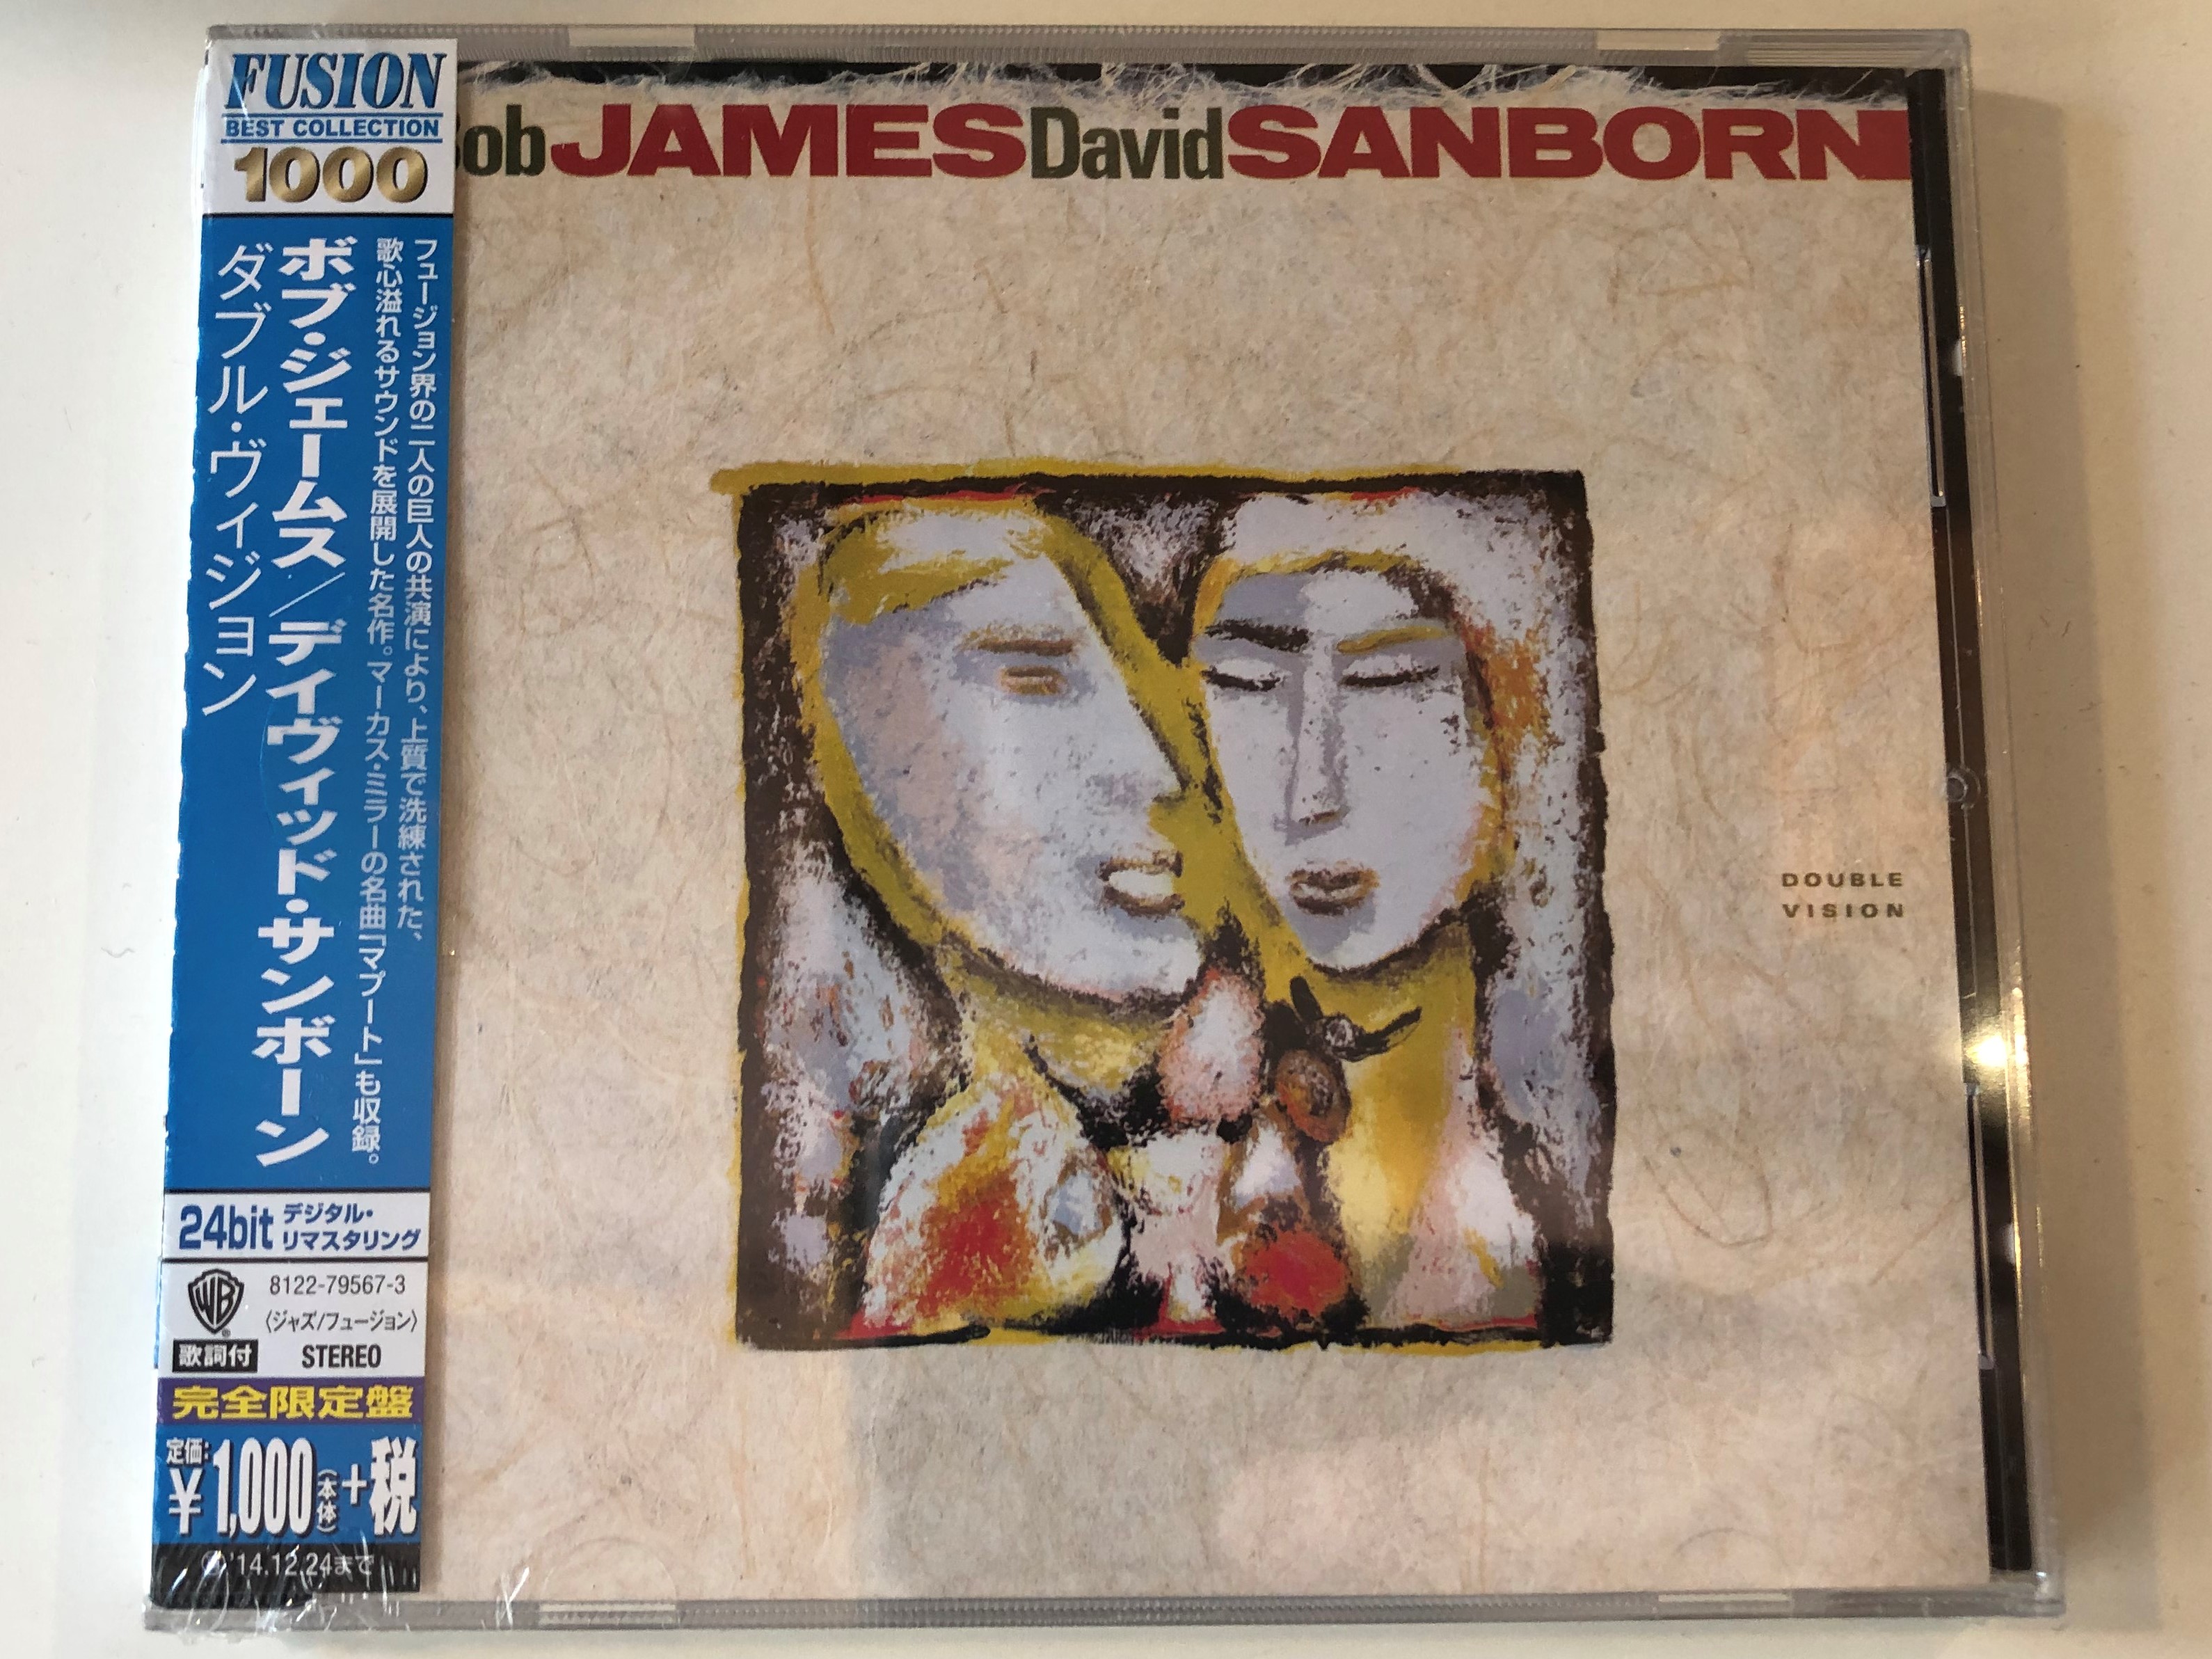 bob-james-david-sanborn-double-vision-fusion-best-collection-1000-warner-bros.-records-audio-cd-1986-stereo-8122-79567-3-1-.jpg